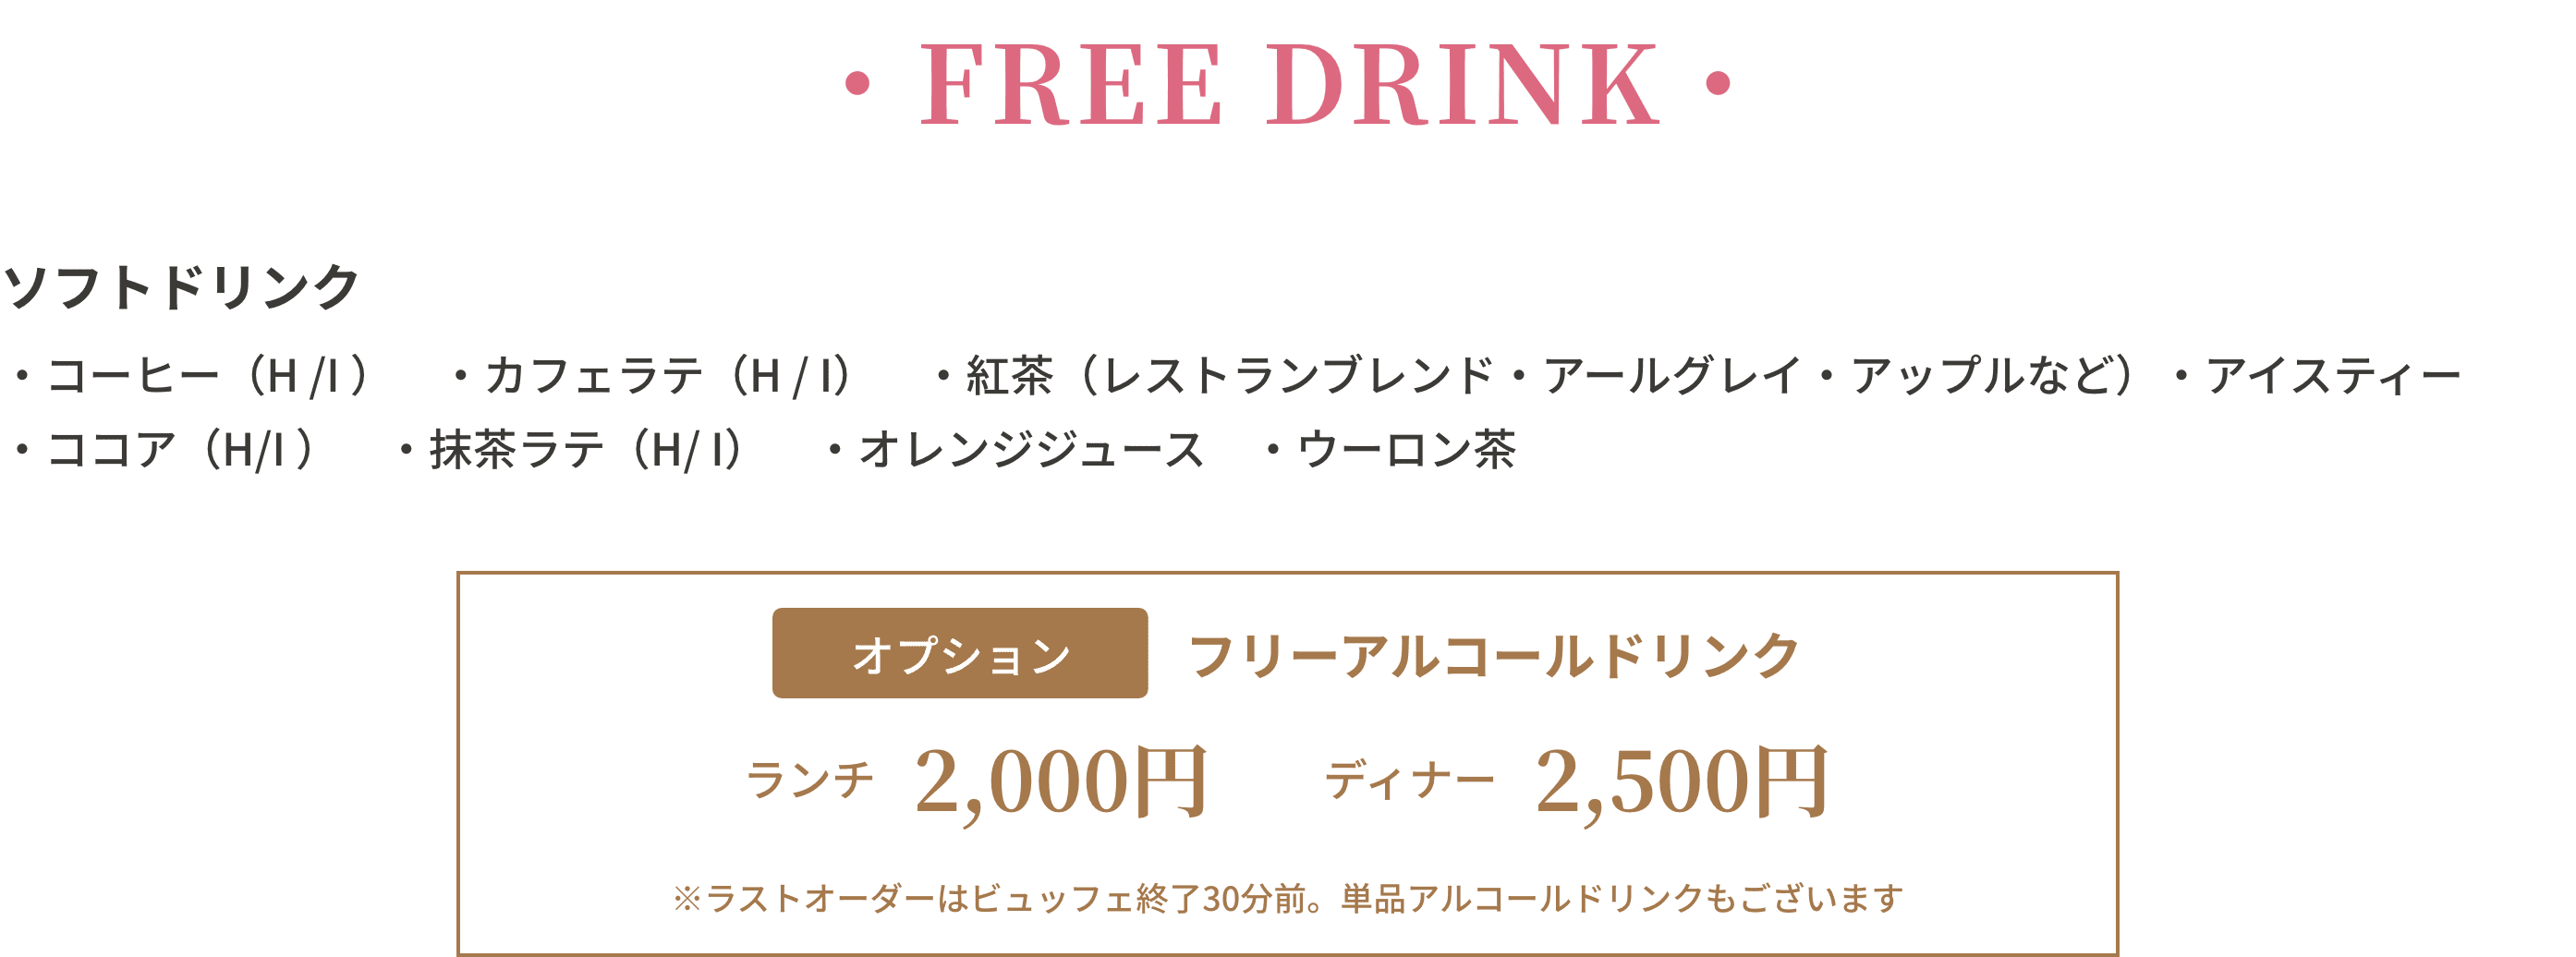 FREE DRINK